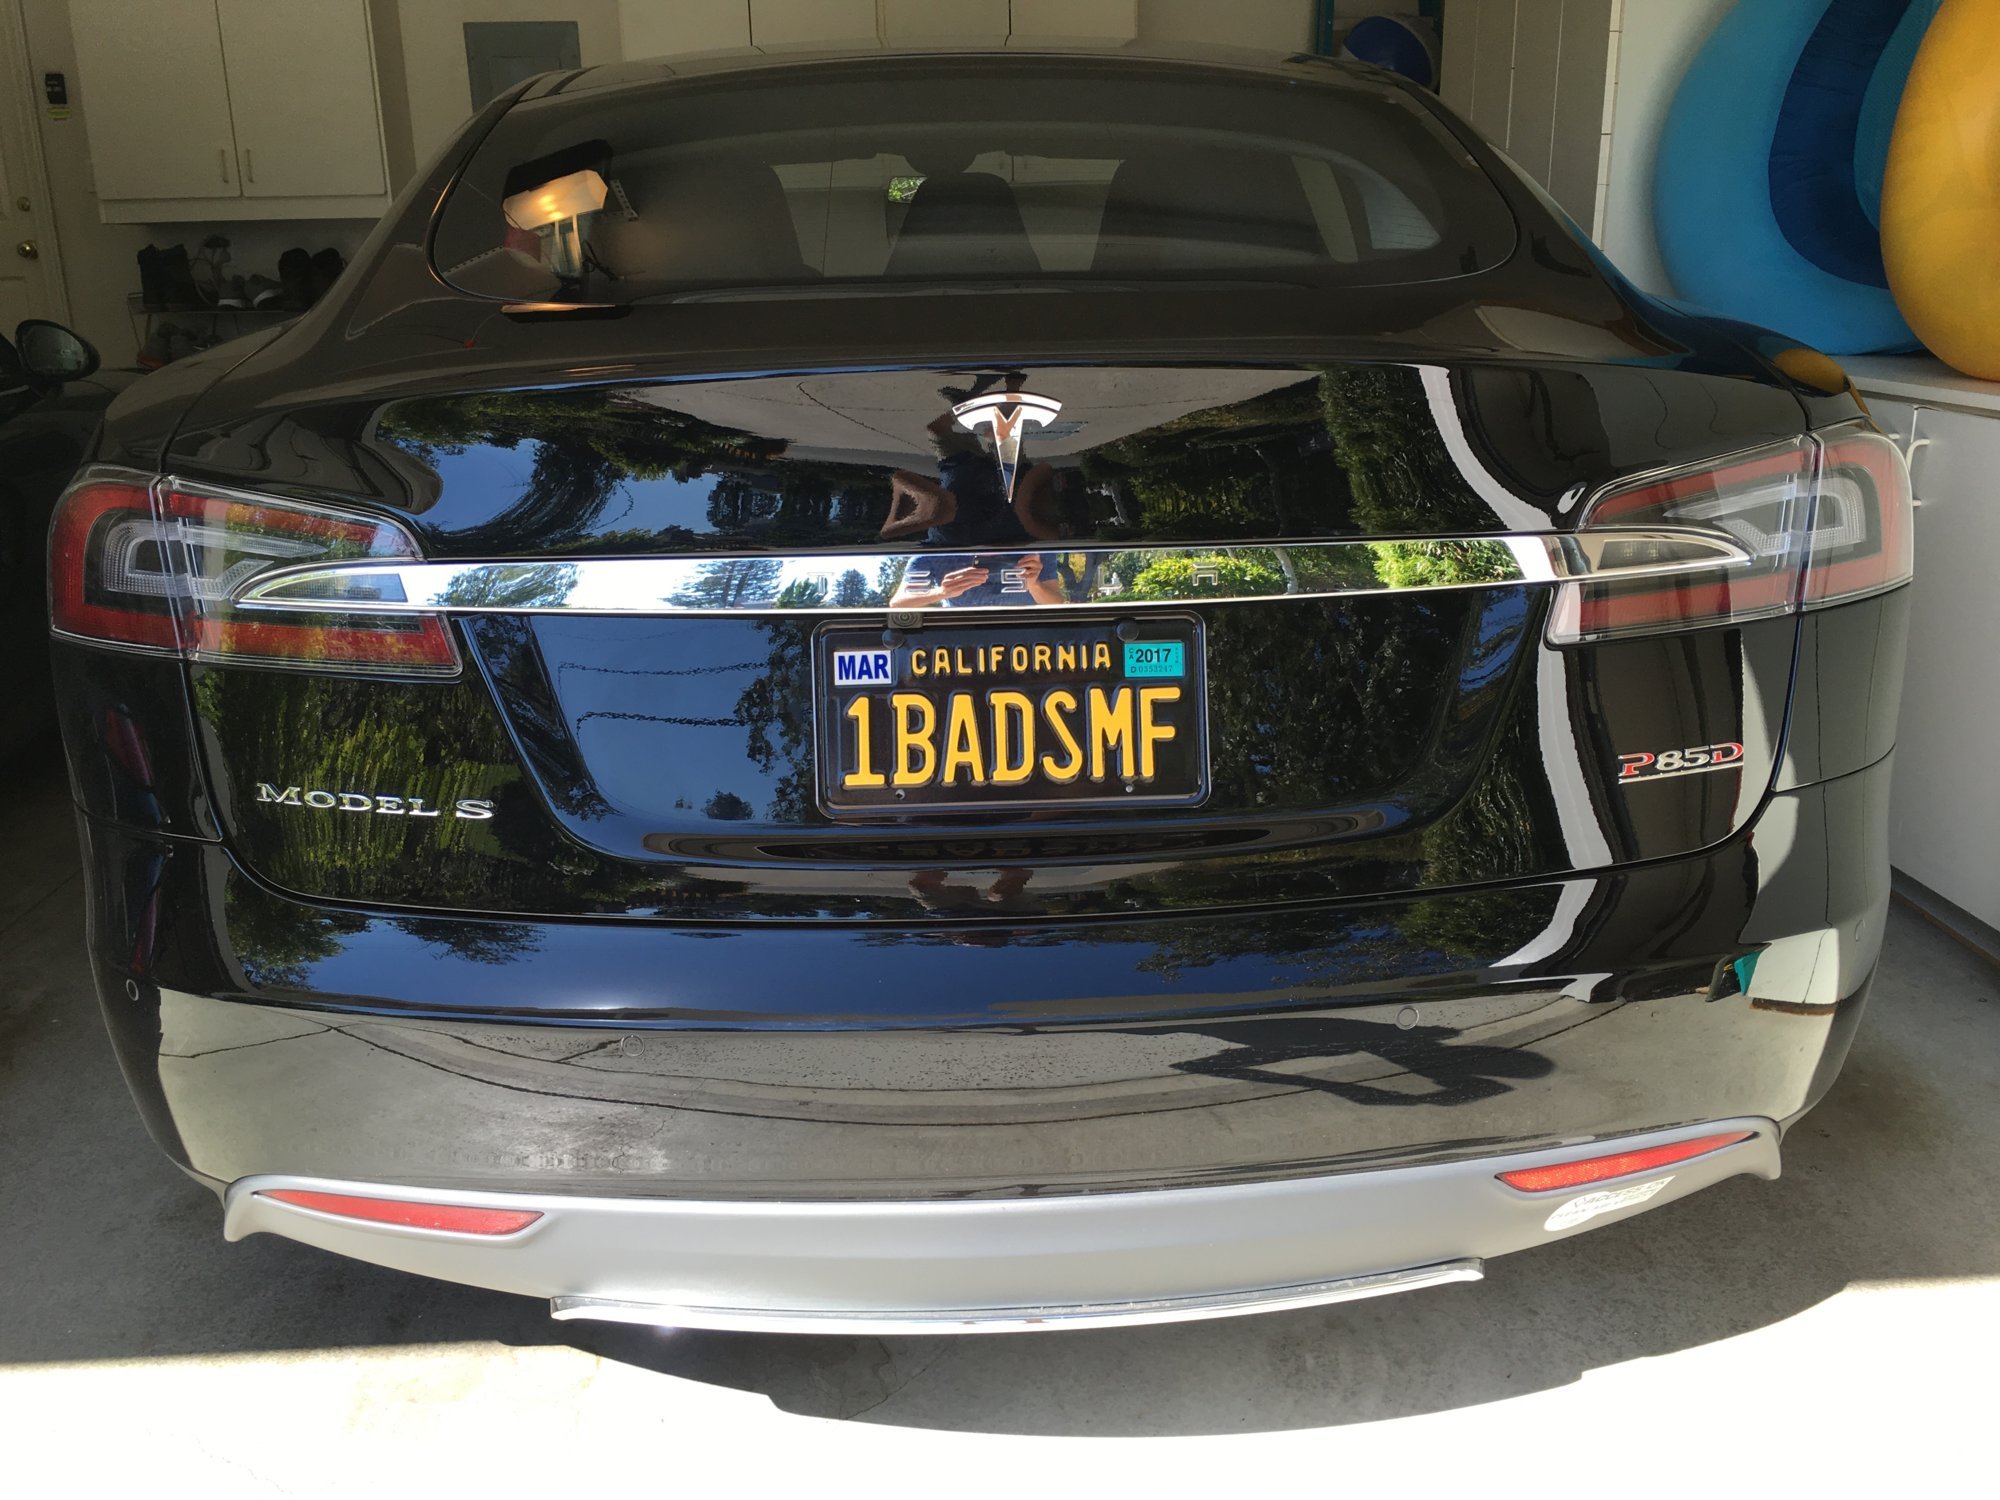 Tesla Ludicrous 1BADSMF.jpg